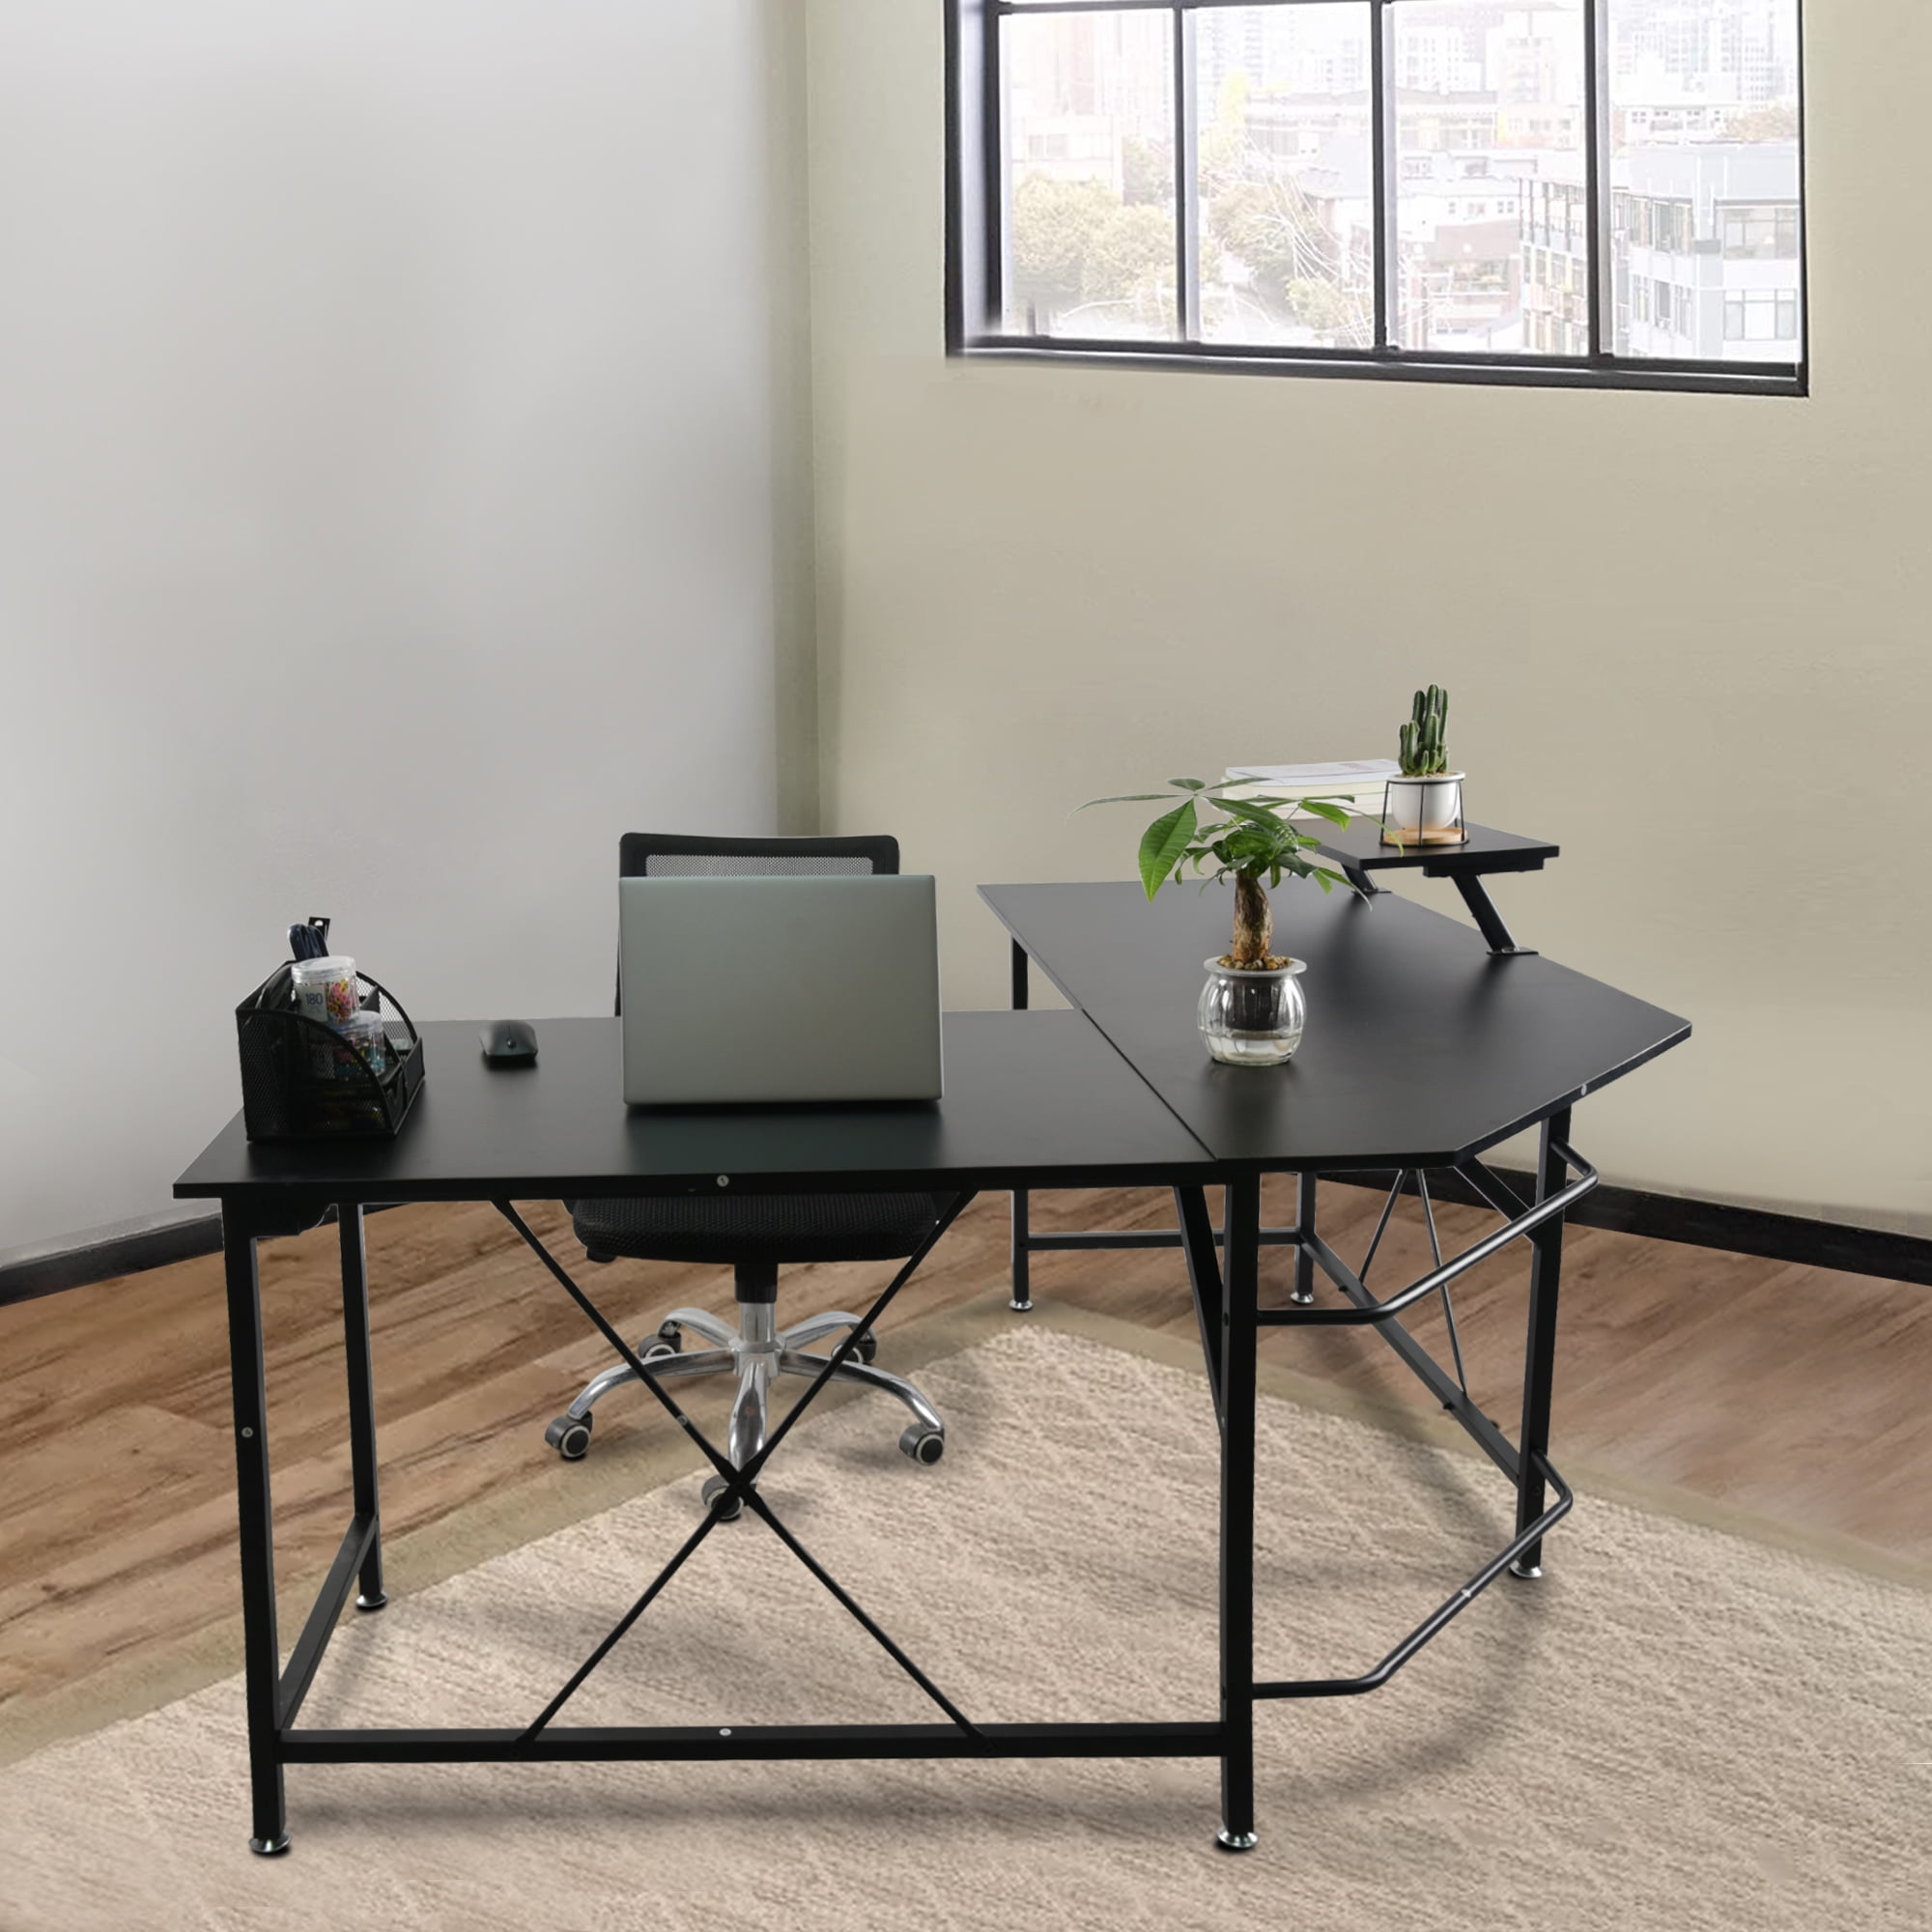  Do Corner Desks Save Space for Small Bedroom